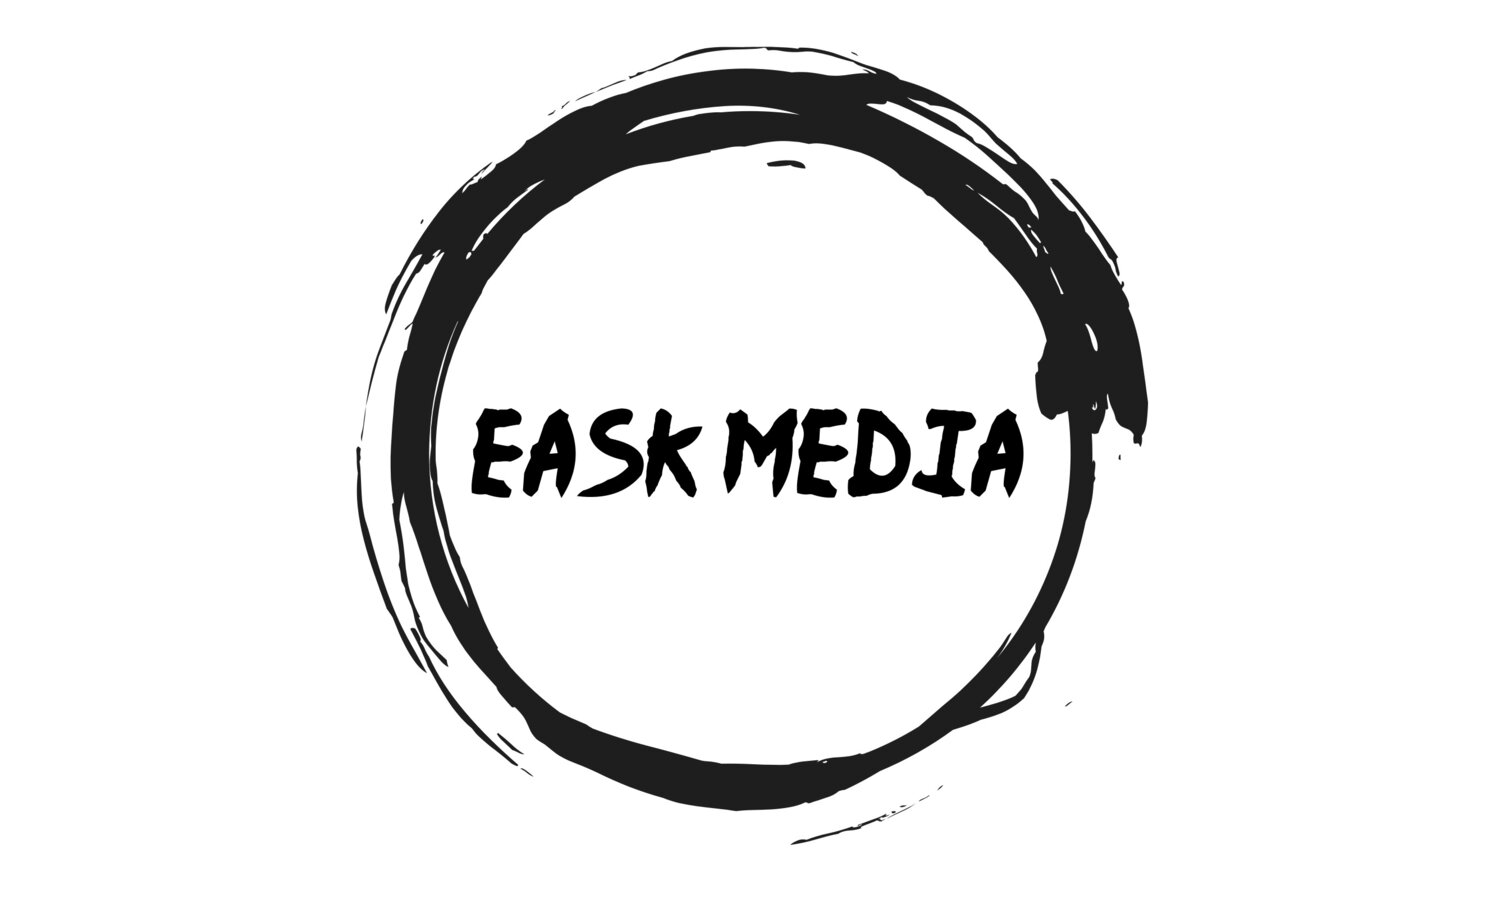 Eask Media